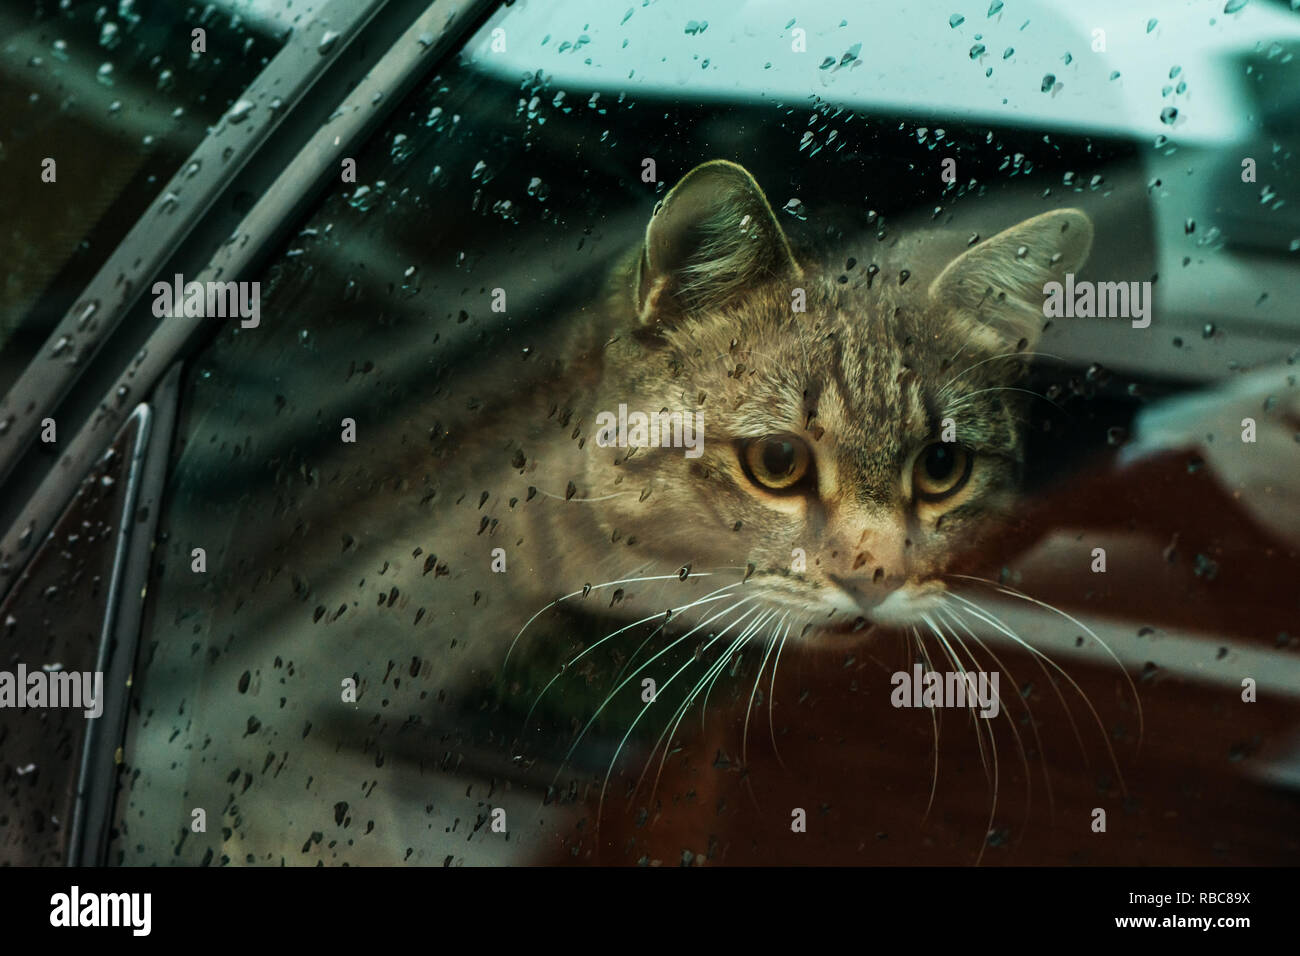 Beautiful cat in the car looking at rain through the window Stock Photo